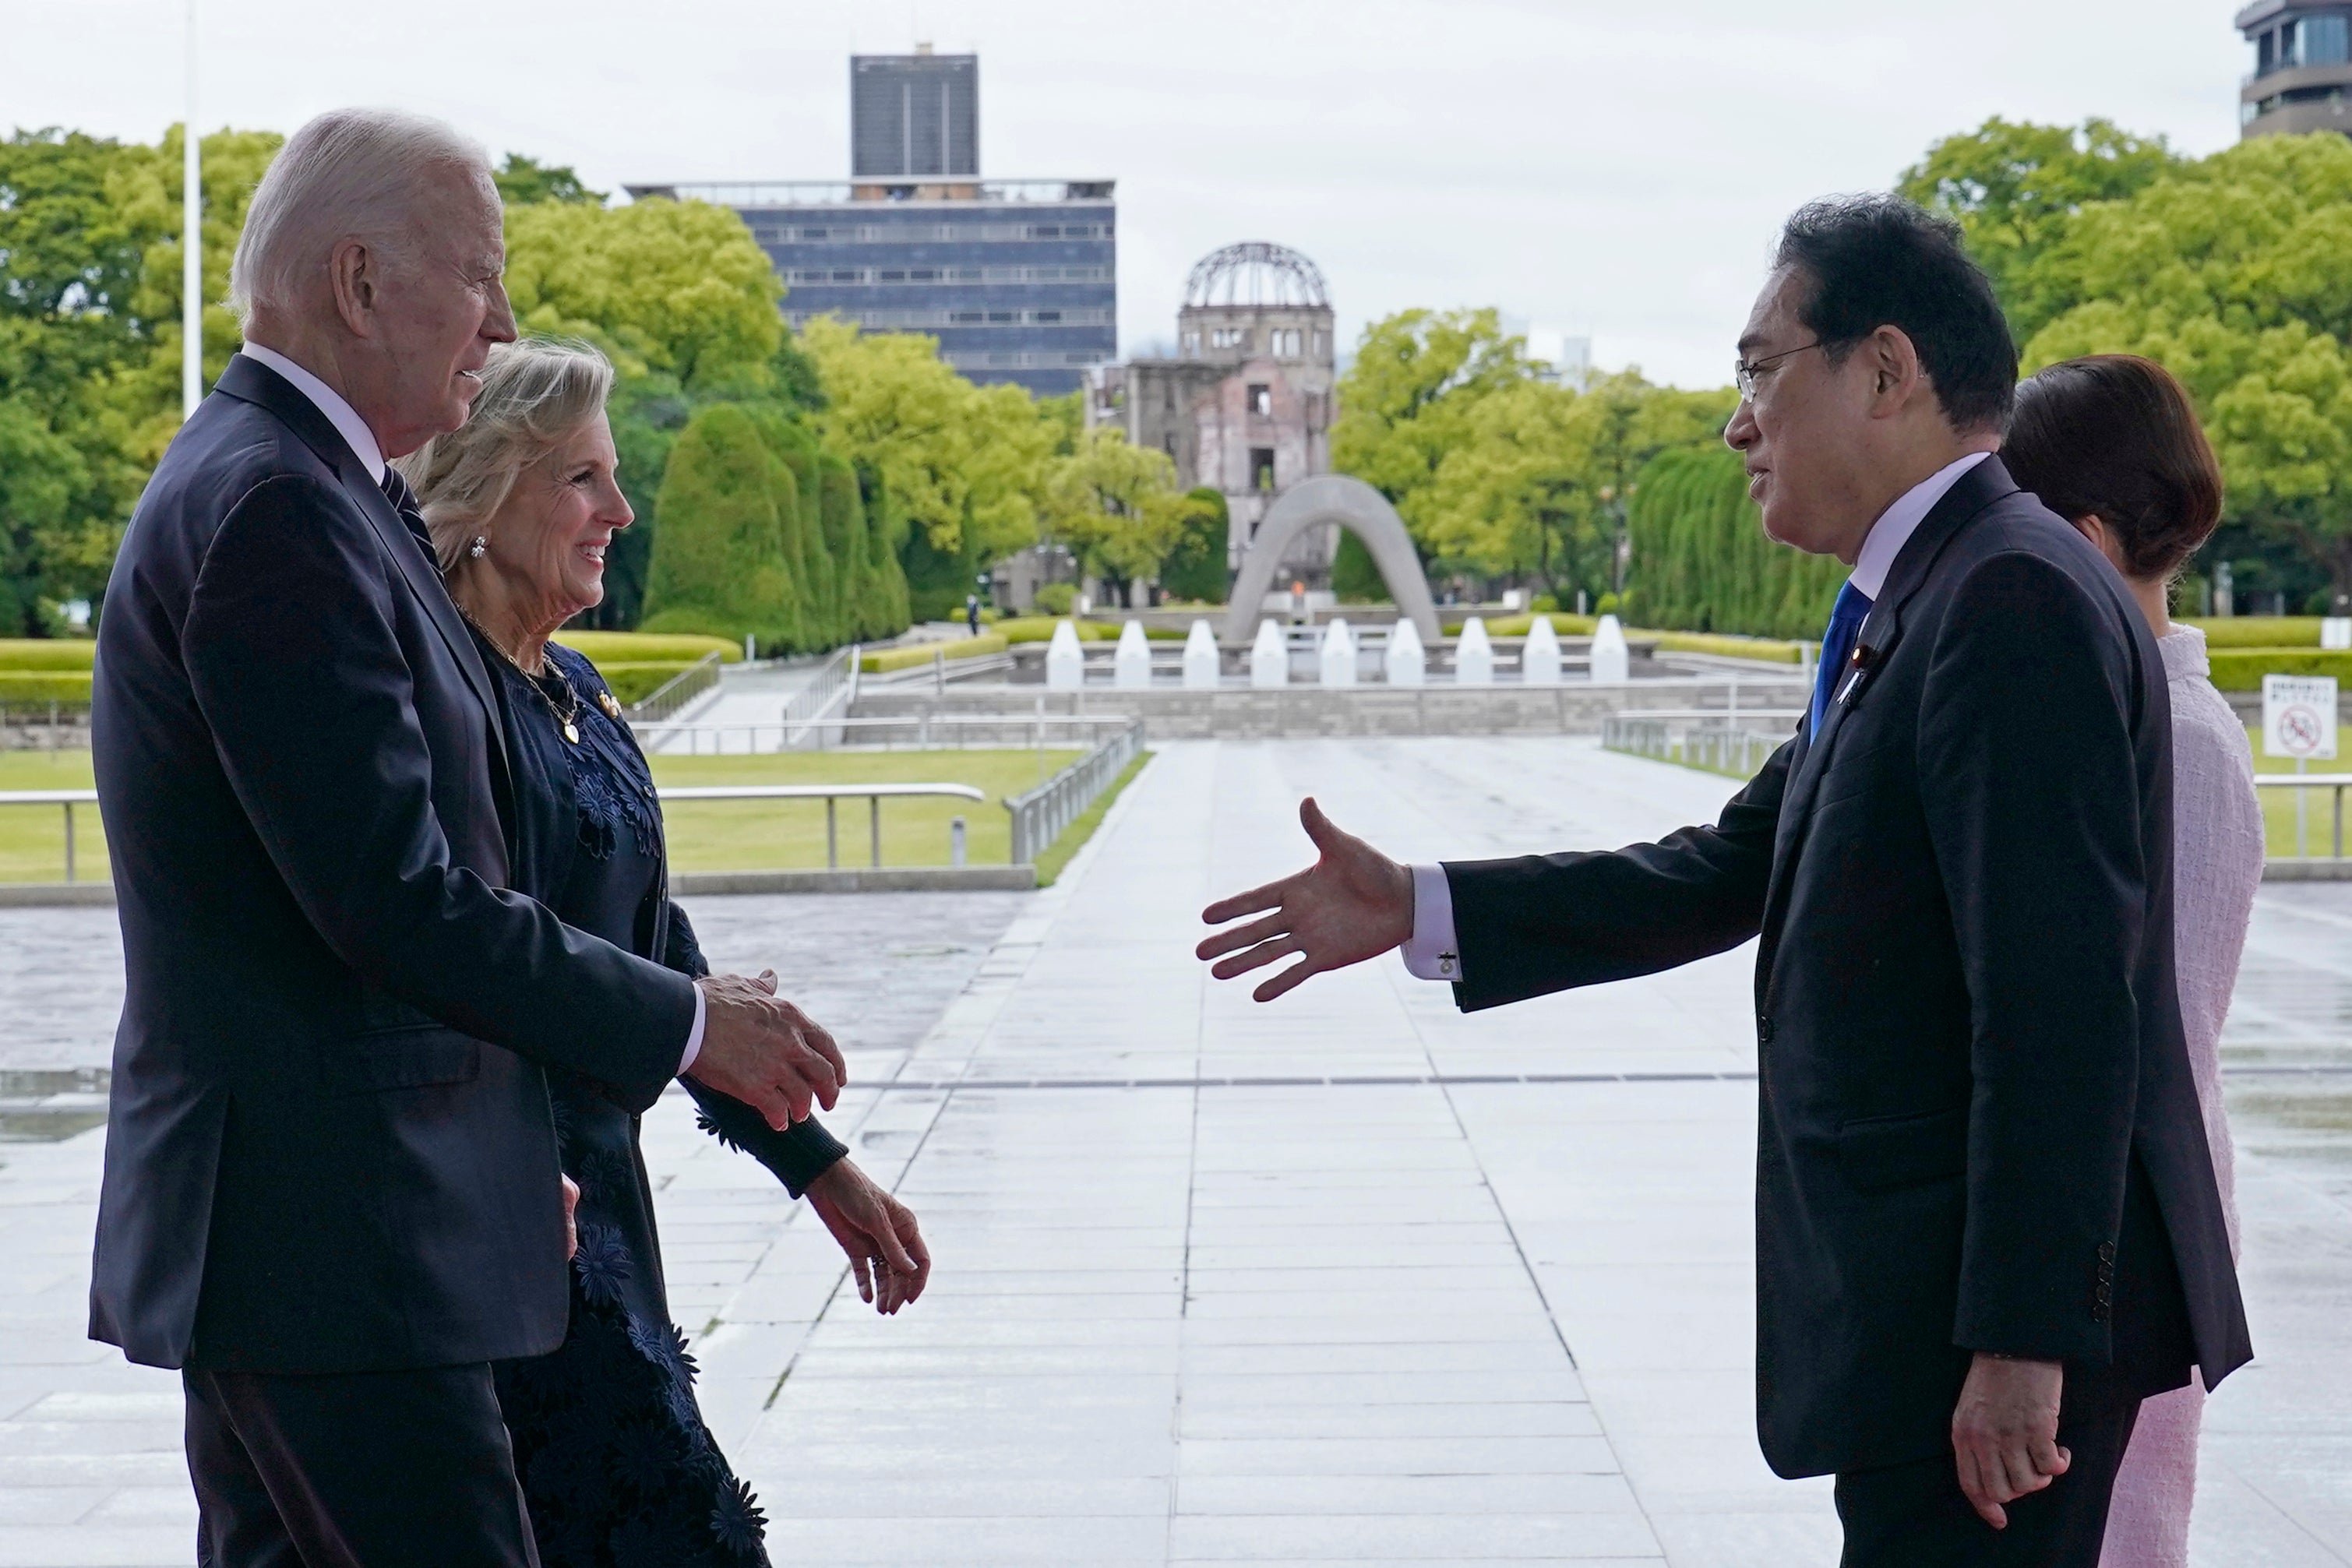 Joe Biden and Jill Biden welcomed by Japan’s Fumio Kishida and his wife Yuko Kishida at the Hiroshima Peace Memorial Park ahead of G7 meeting